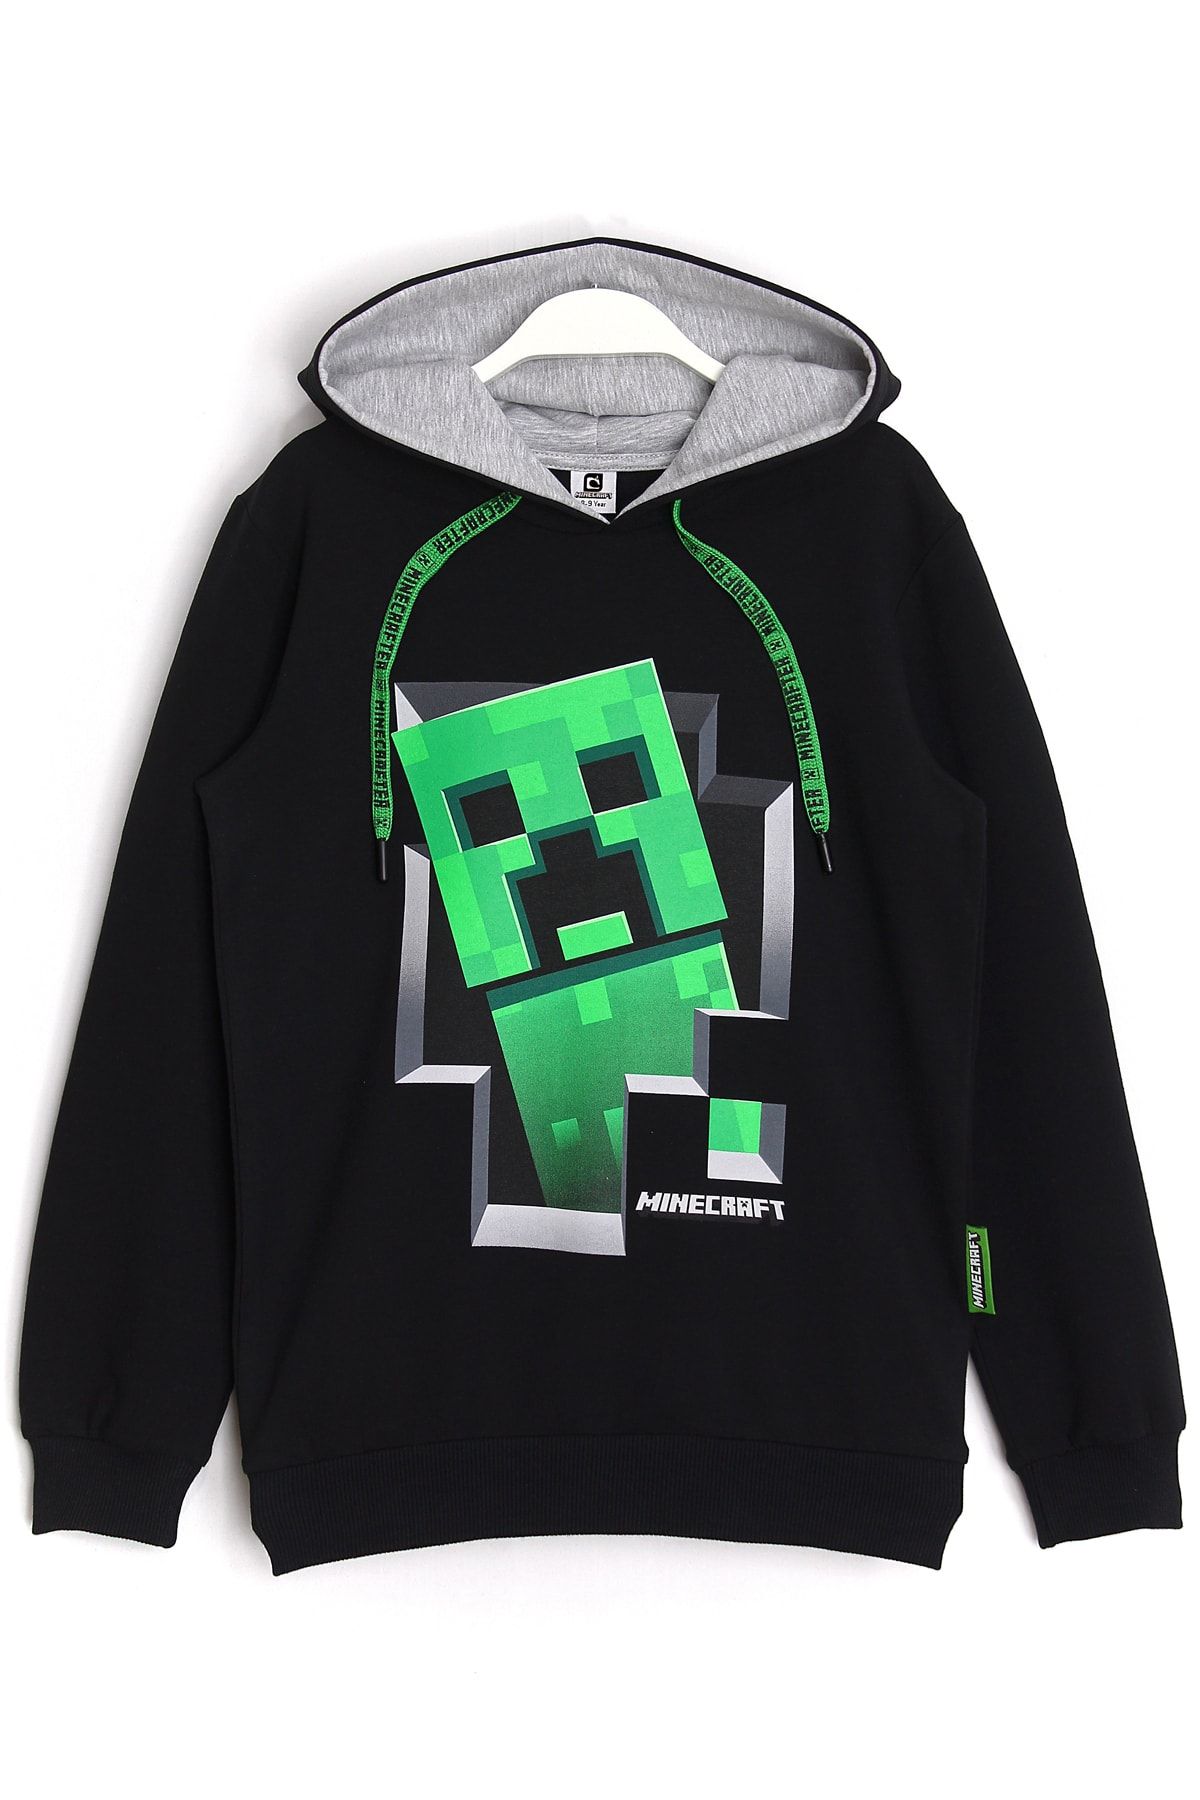 DobaKids Çocuk Minecraft Creeper Baskılı Bağcık Detaylı Kapüşonlu Sweatshirt Hoodie Siyah Renk